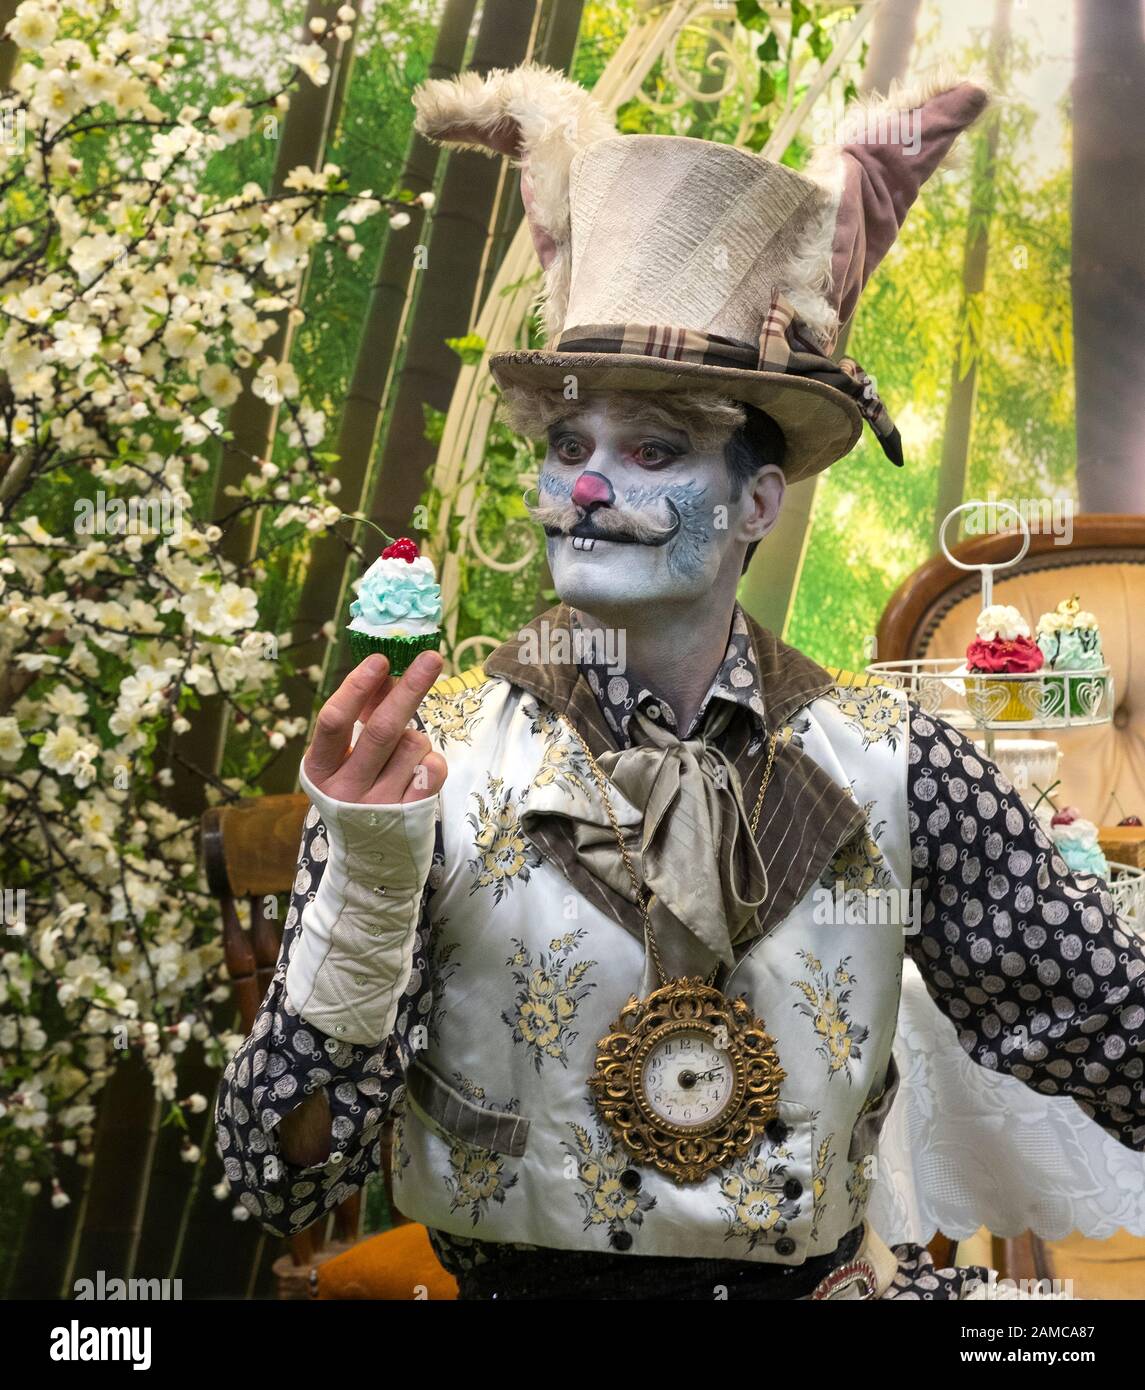 Måling Almindeligt Tick Alice In Wonderland Mad Hatter character posing for photographs Stock Photo  - Alamy